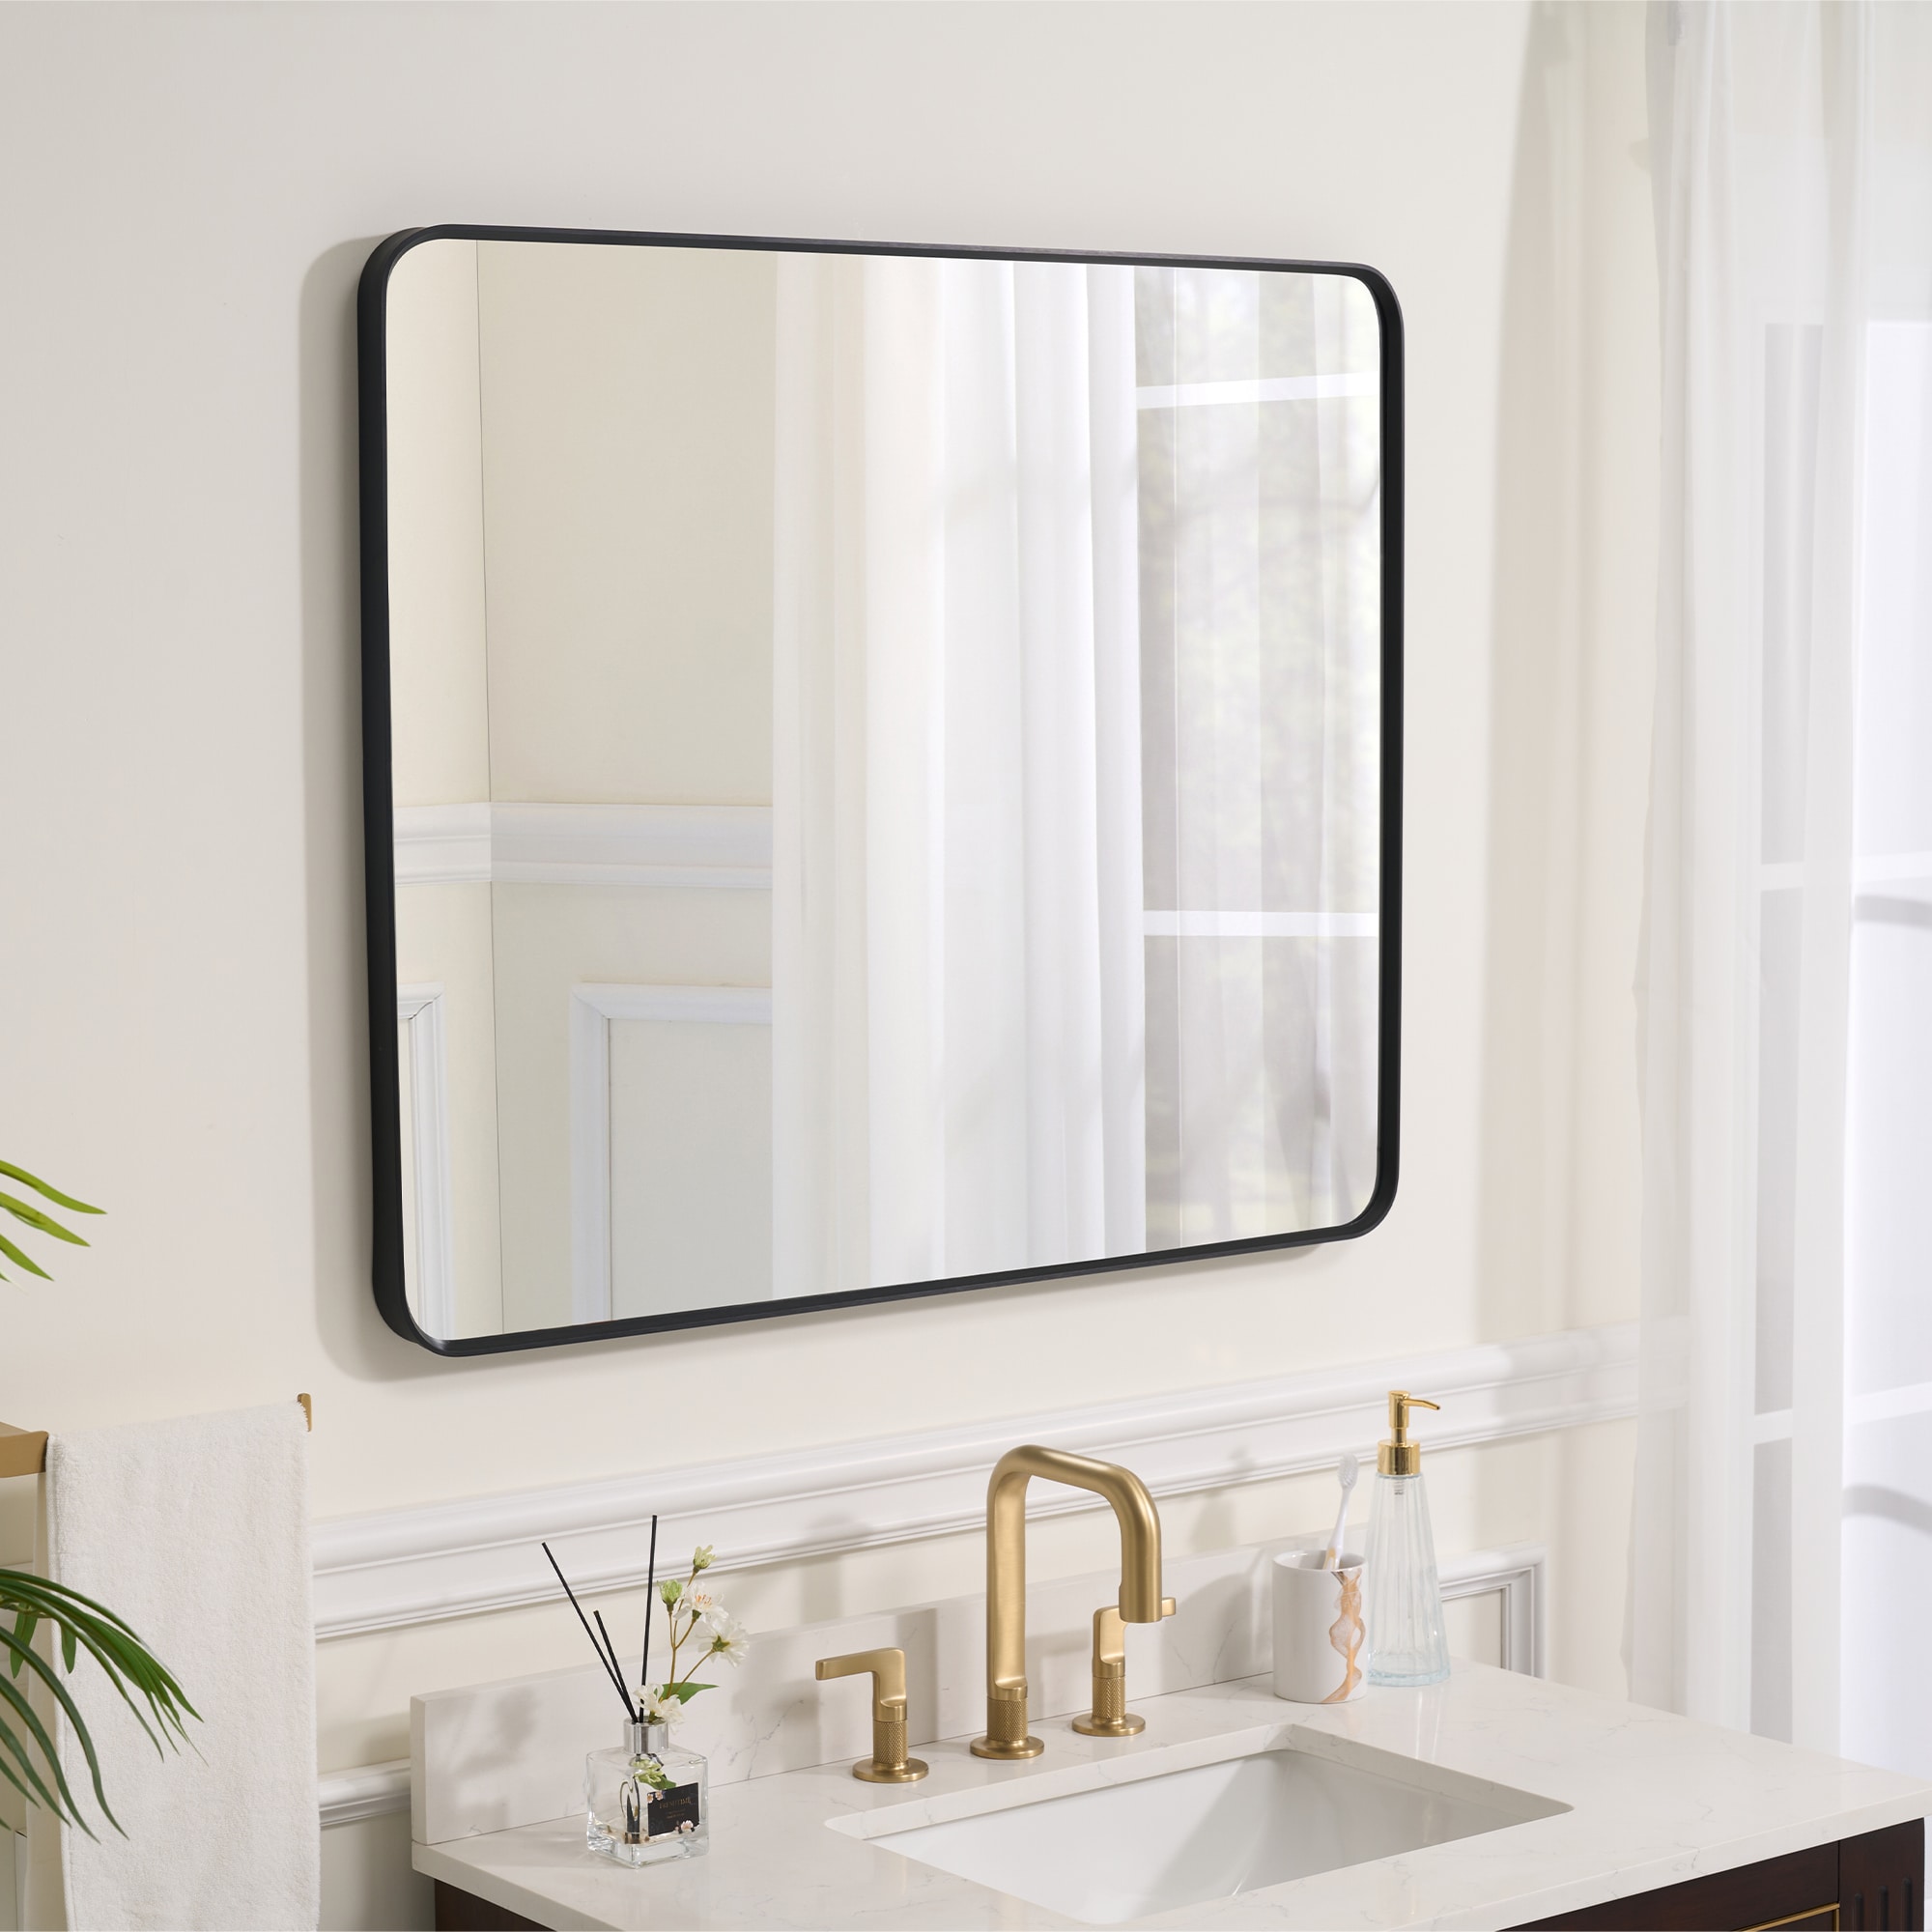 WELLFOR F1 Bathroom Mirror 30-in x 36-in Black Framed Bathroom